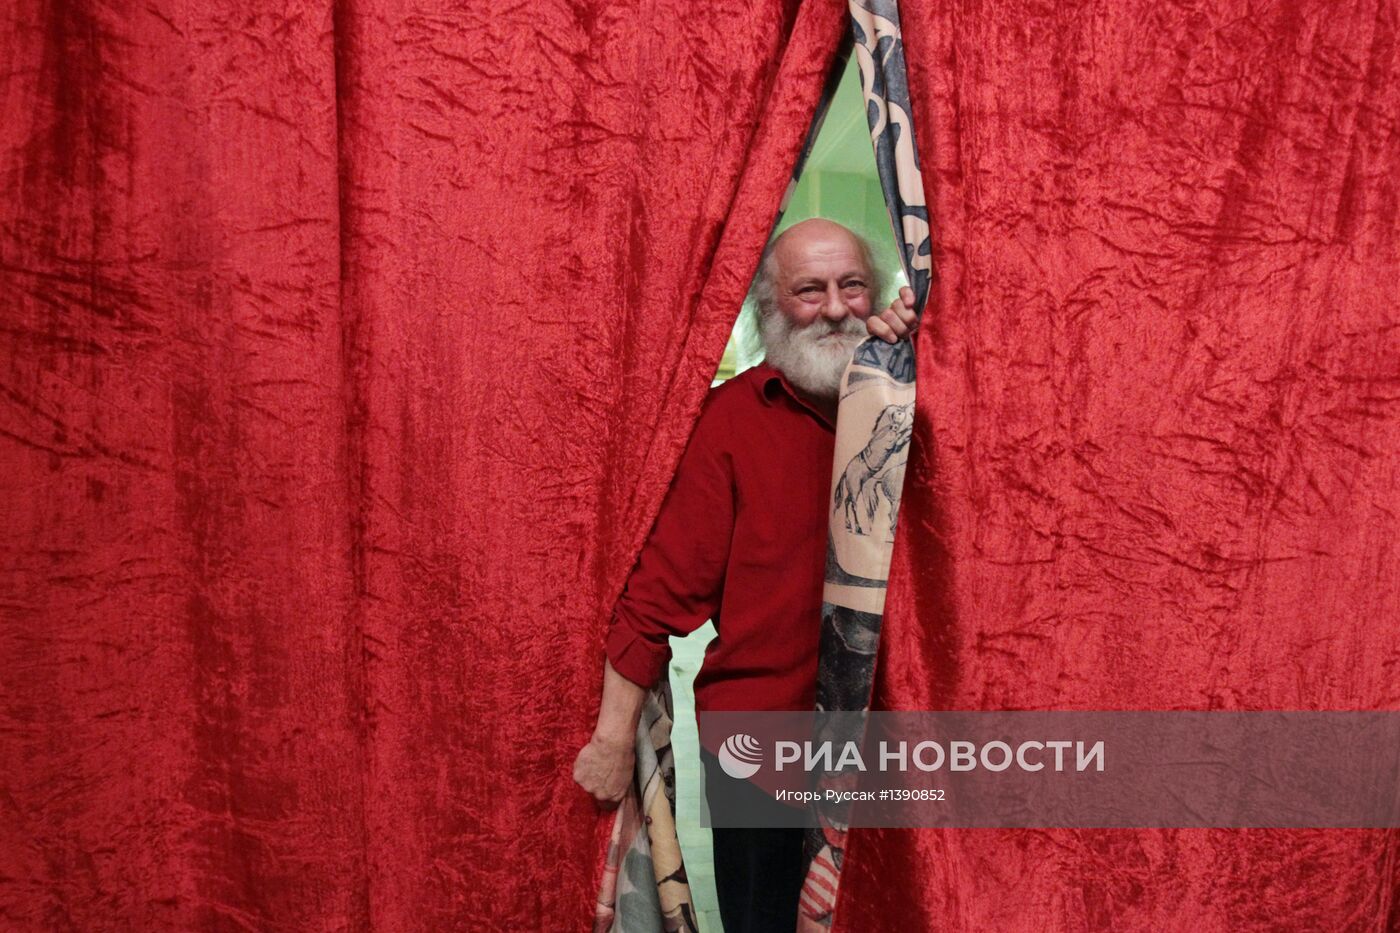 Пресс-конференция Вячеслава Полунина в Цирке на Фонтанке